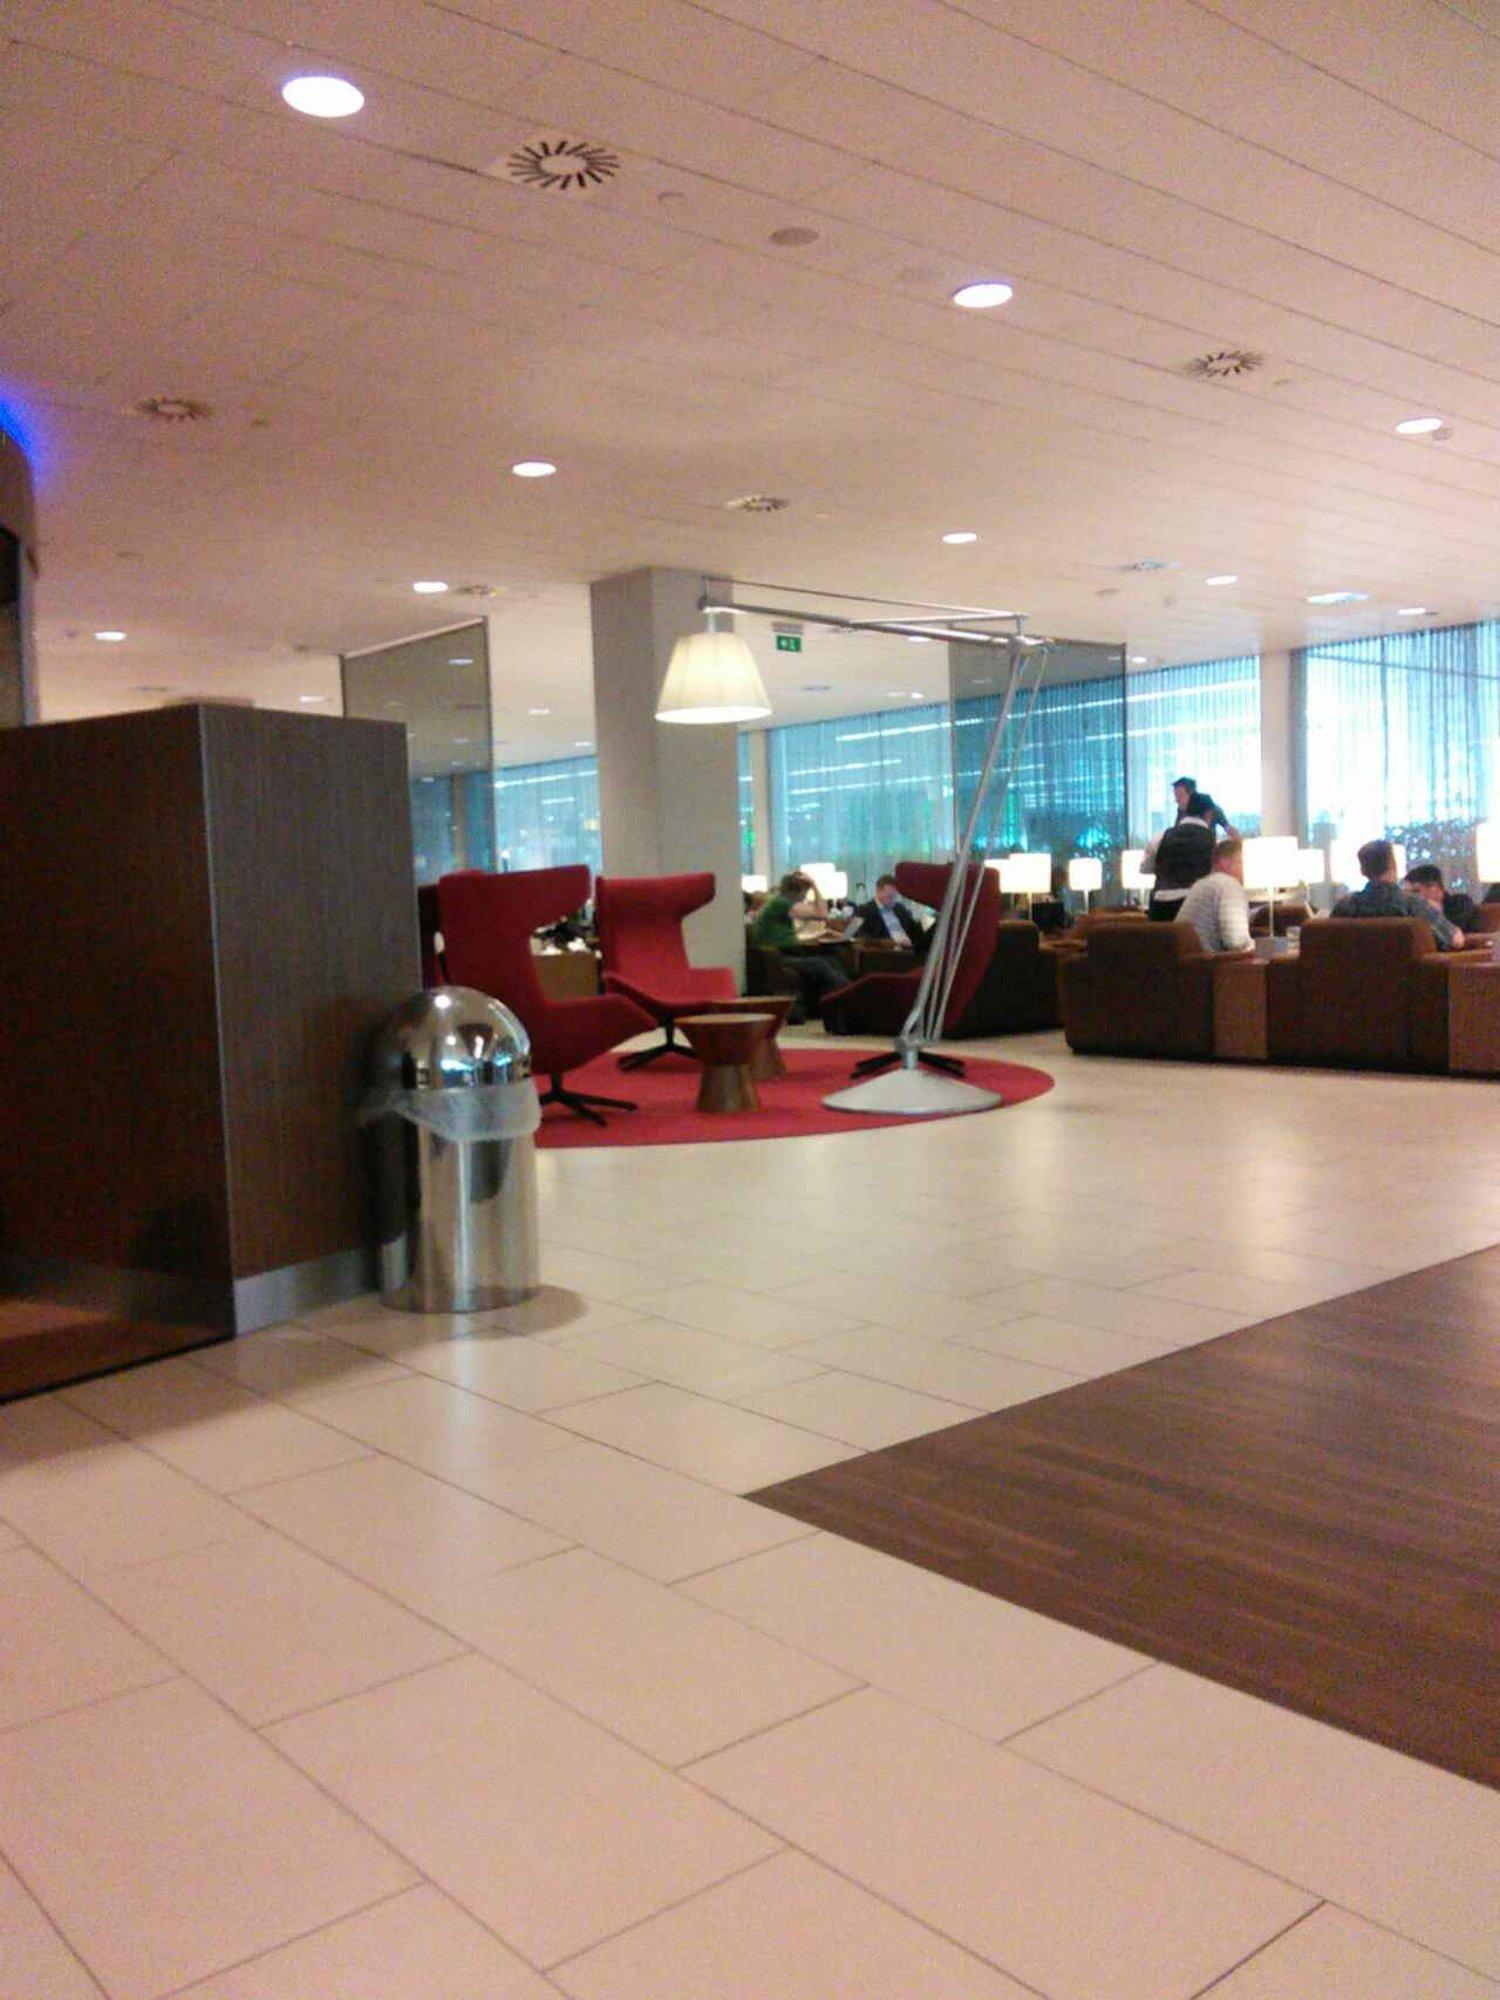 KLM Crown Lounge (25) image 1 of 15